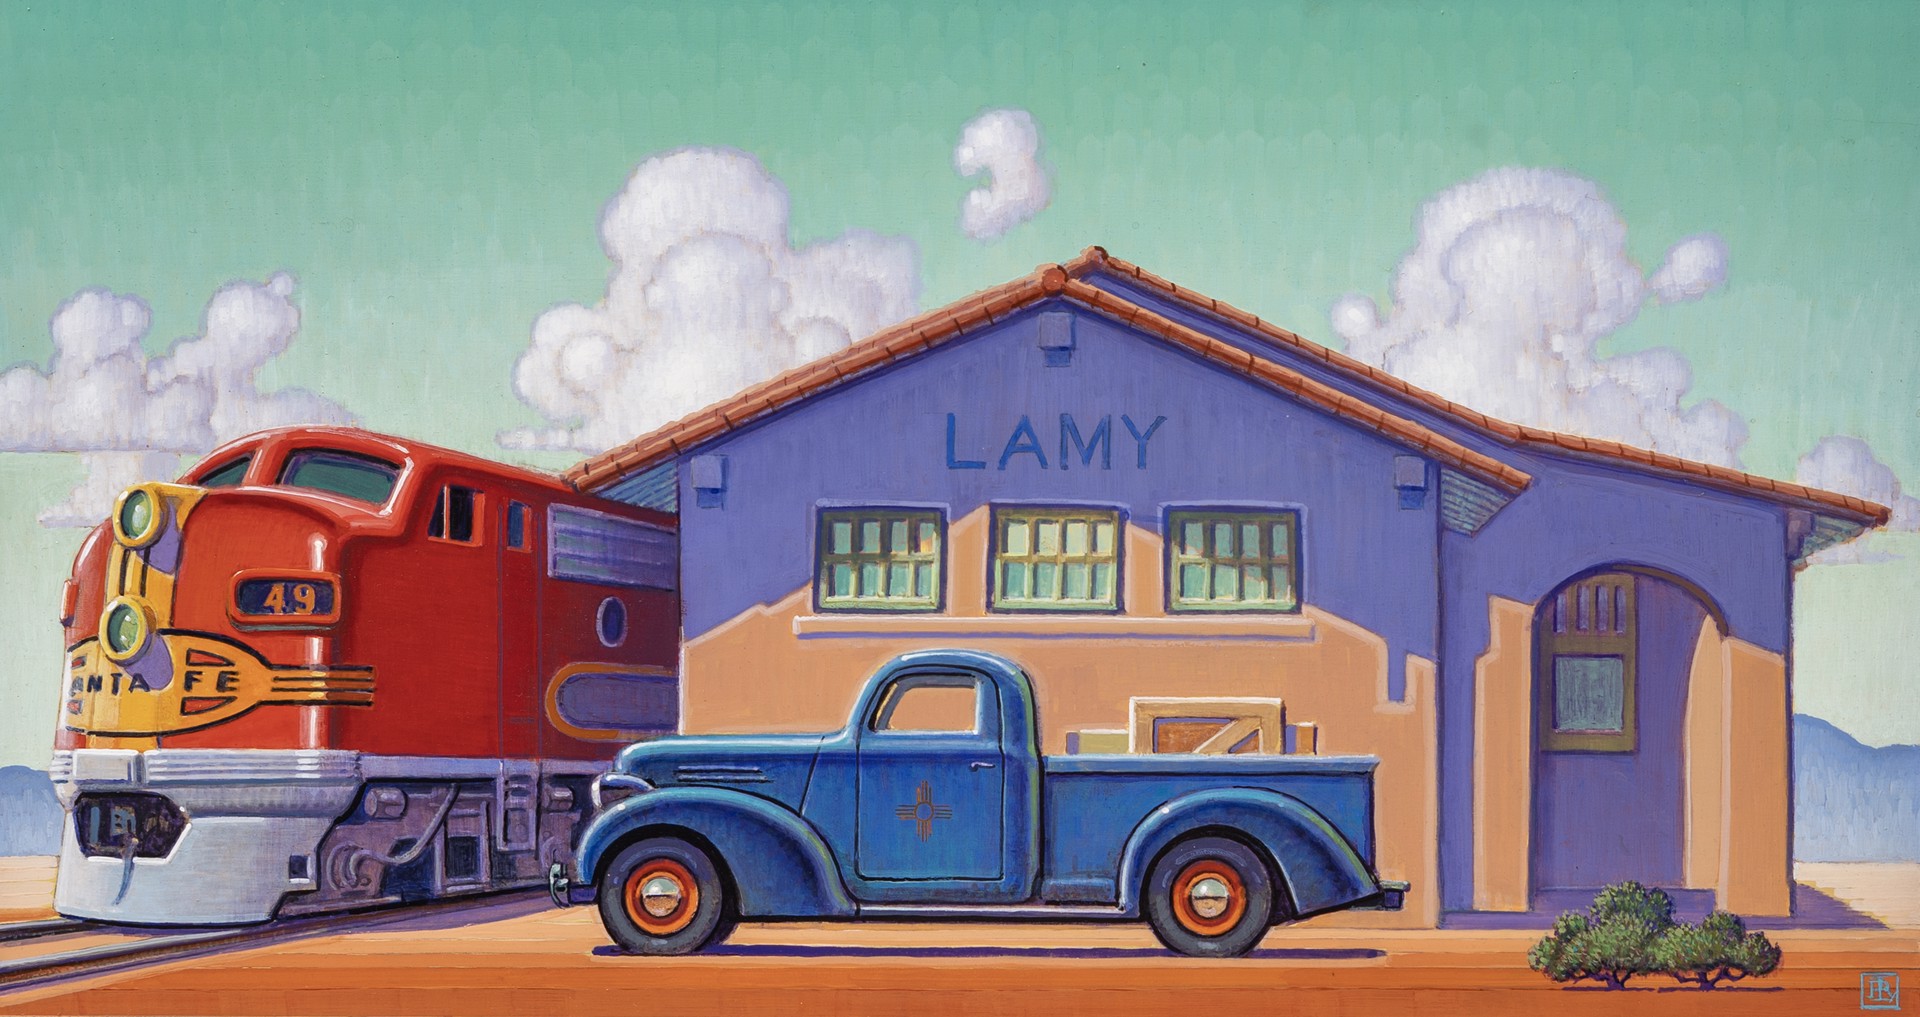 Lamy by Robert LaDuke